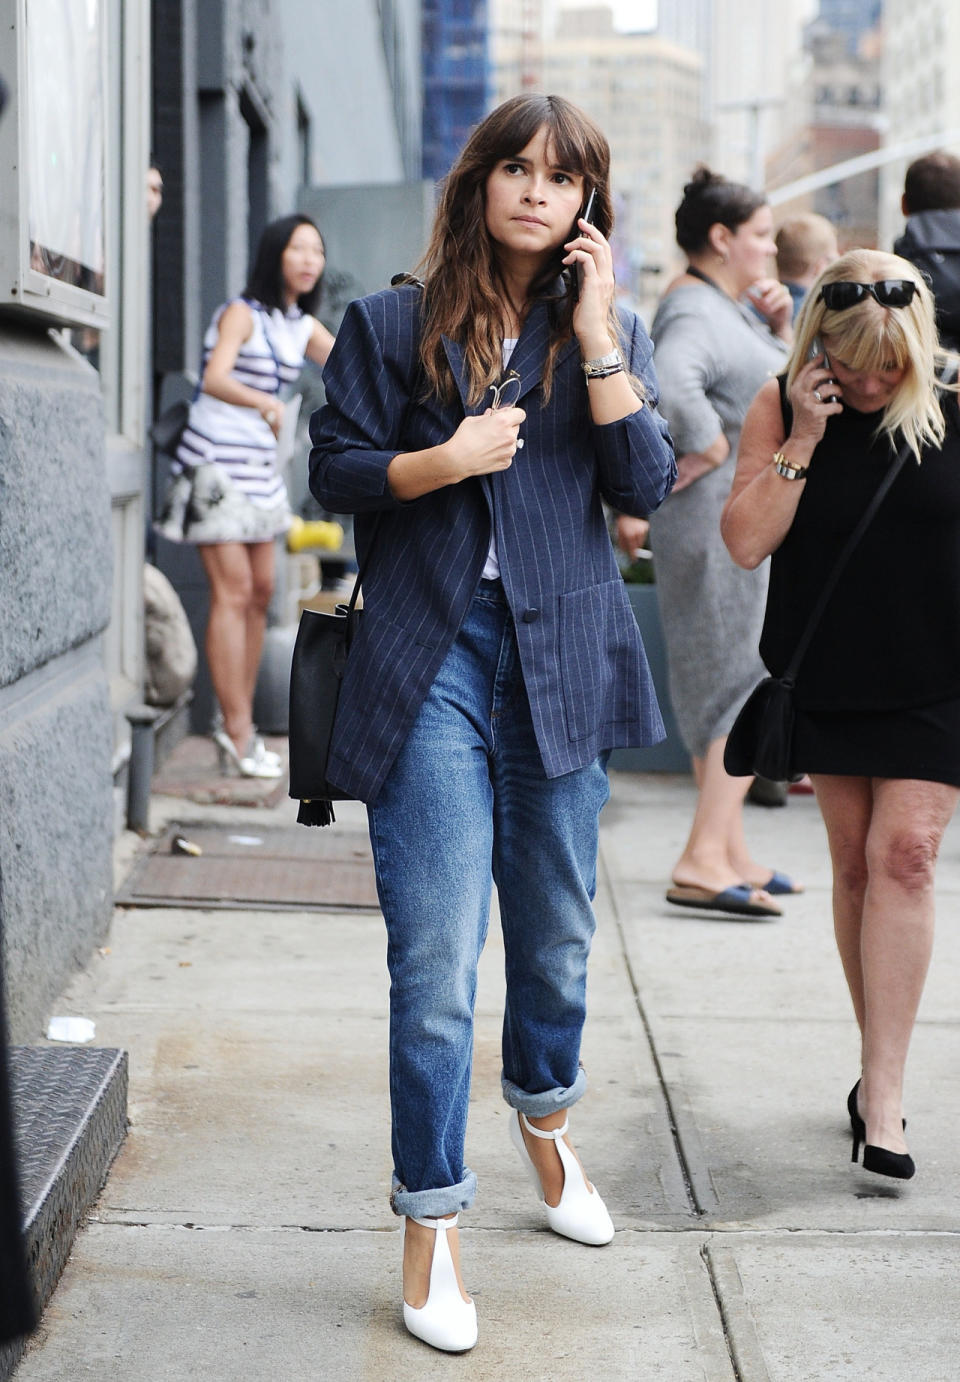 Miroslava Duma in jeans and a blazer at New York Fashion Week.